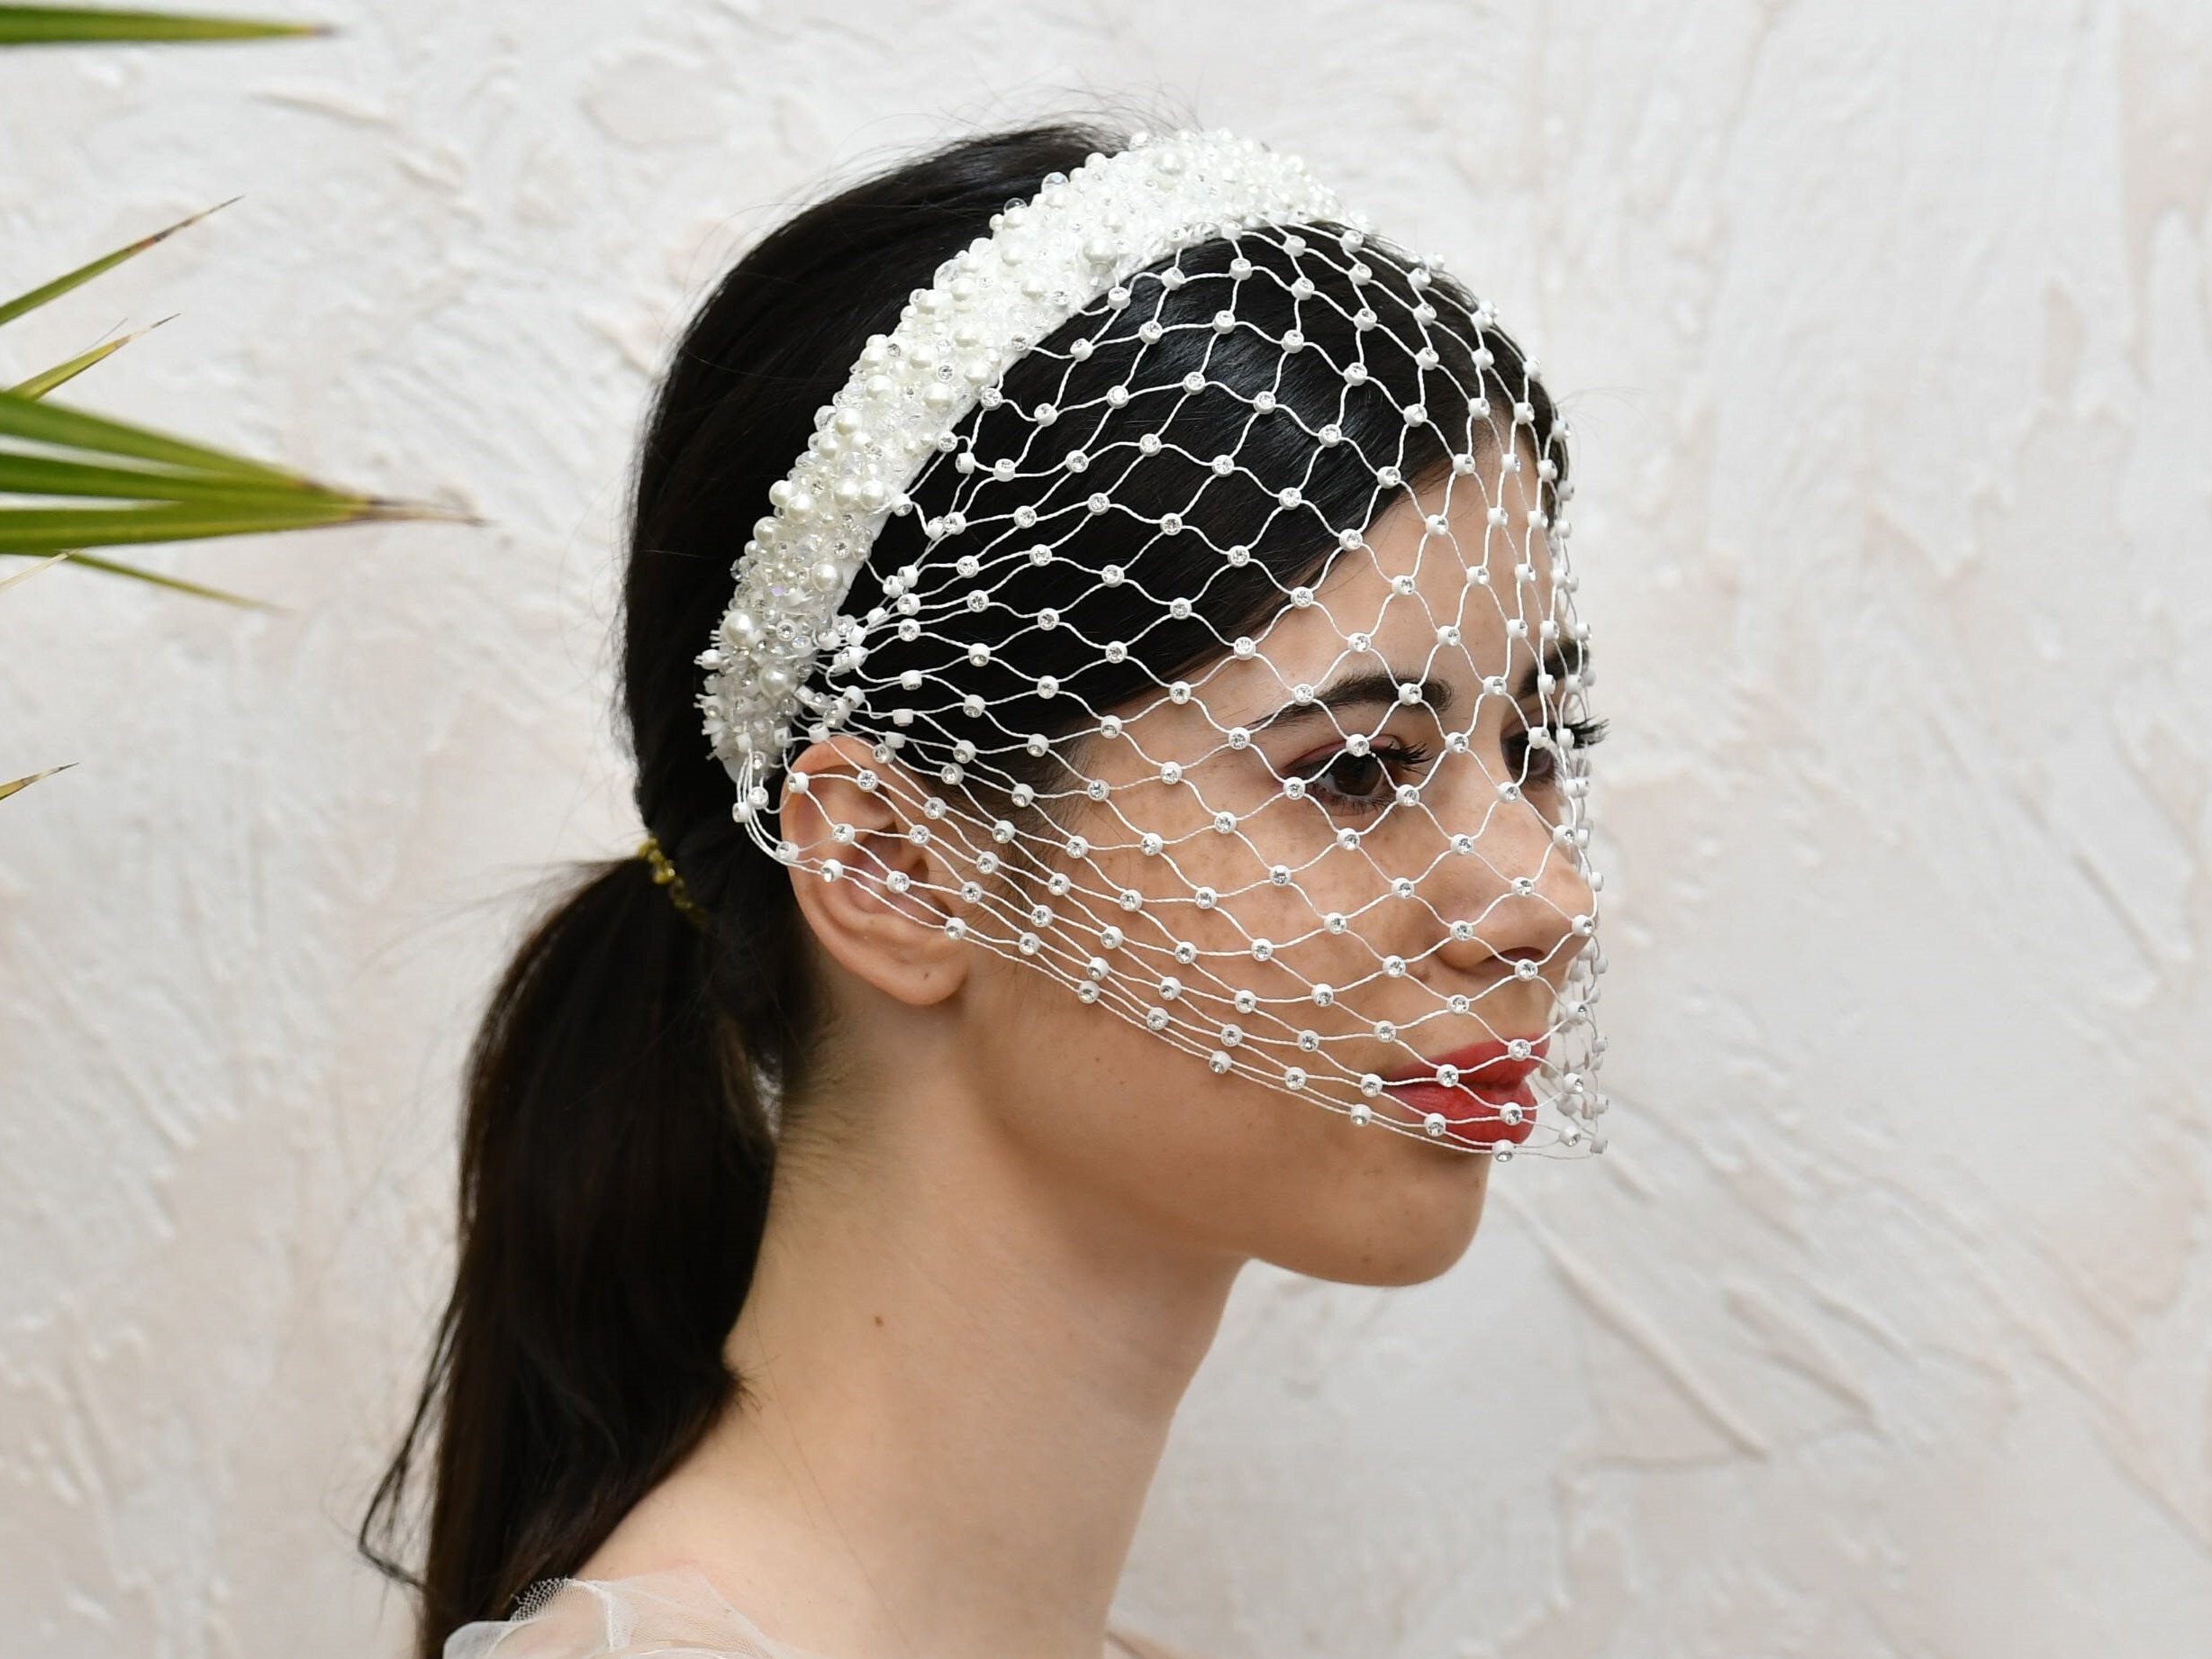 French netting Birdcage veil on a headband. – by Galinka